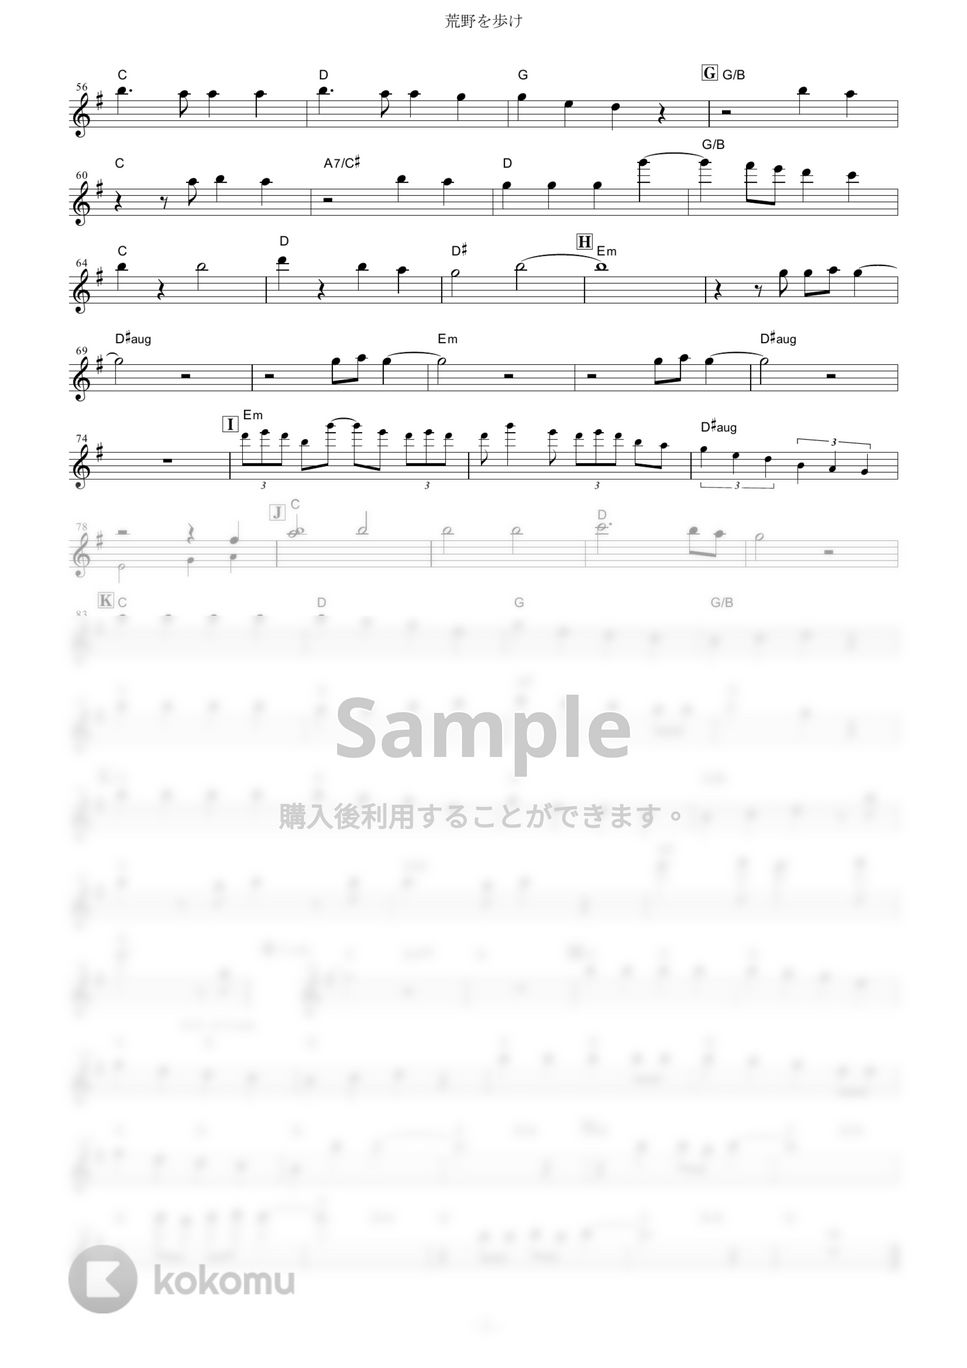 ASIAN KUNG-FU GENERATION - 荒野を歩け (『夜は短し歩けよ乙女』 / in C) by muta-sax